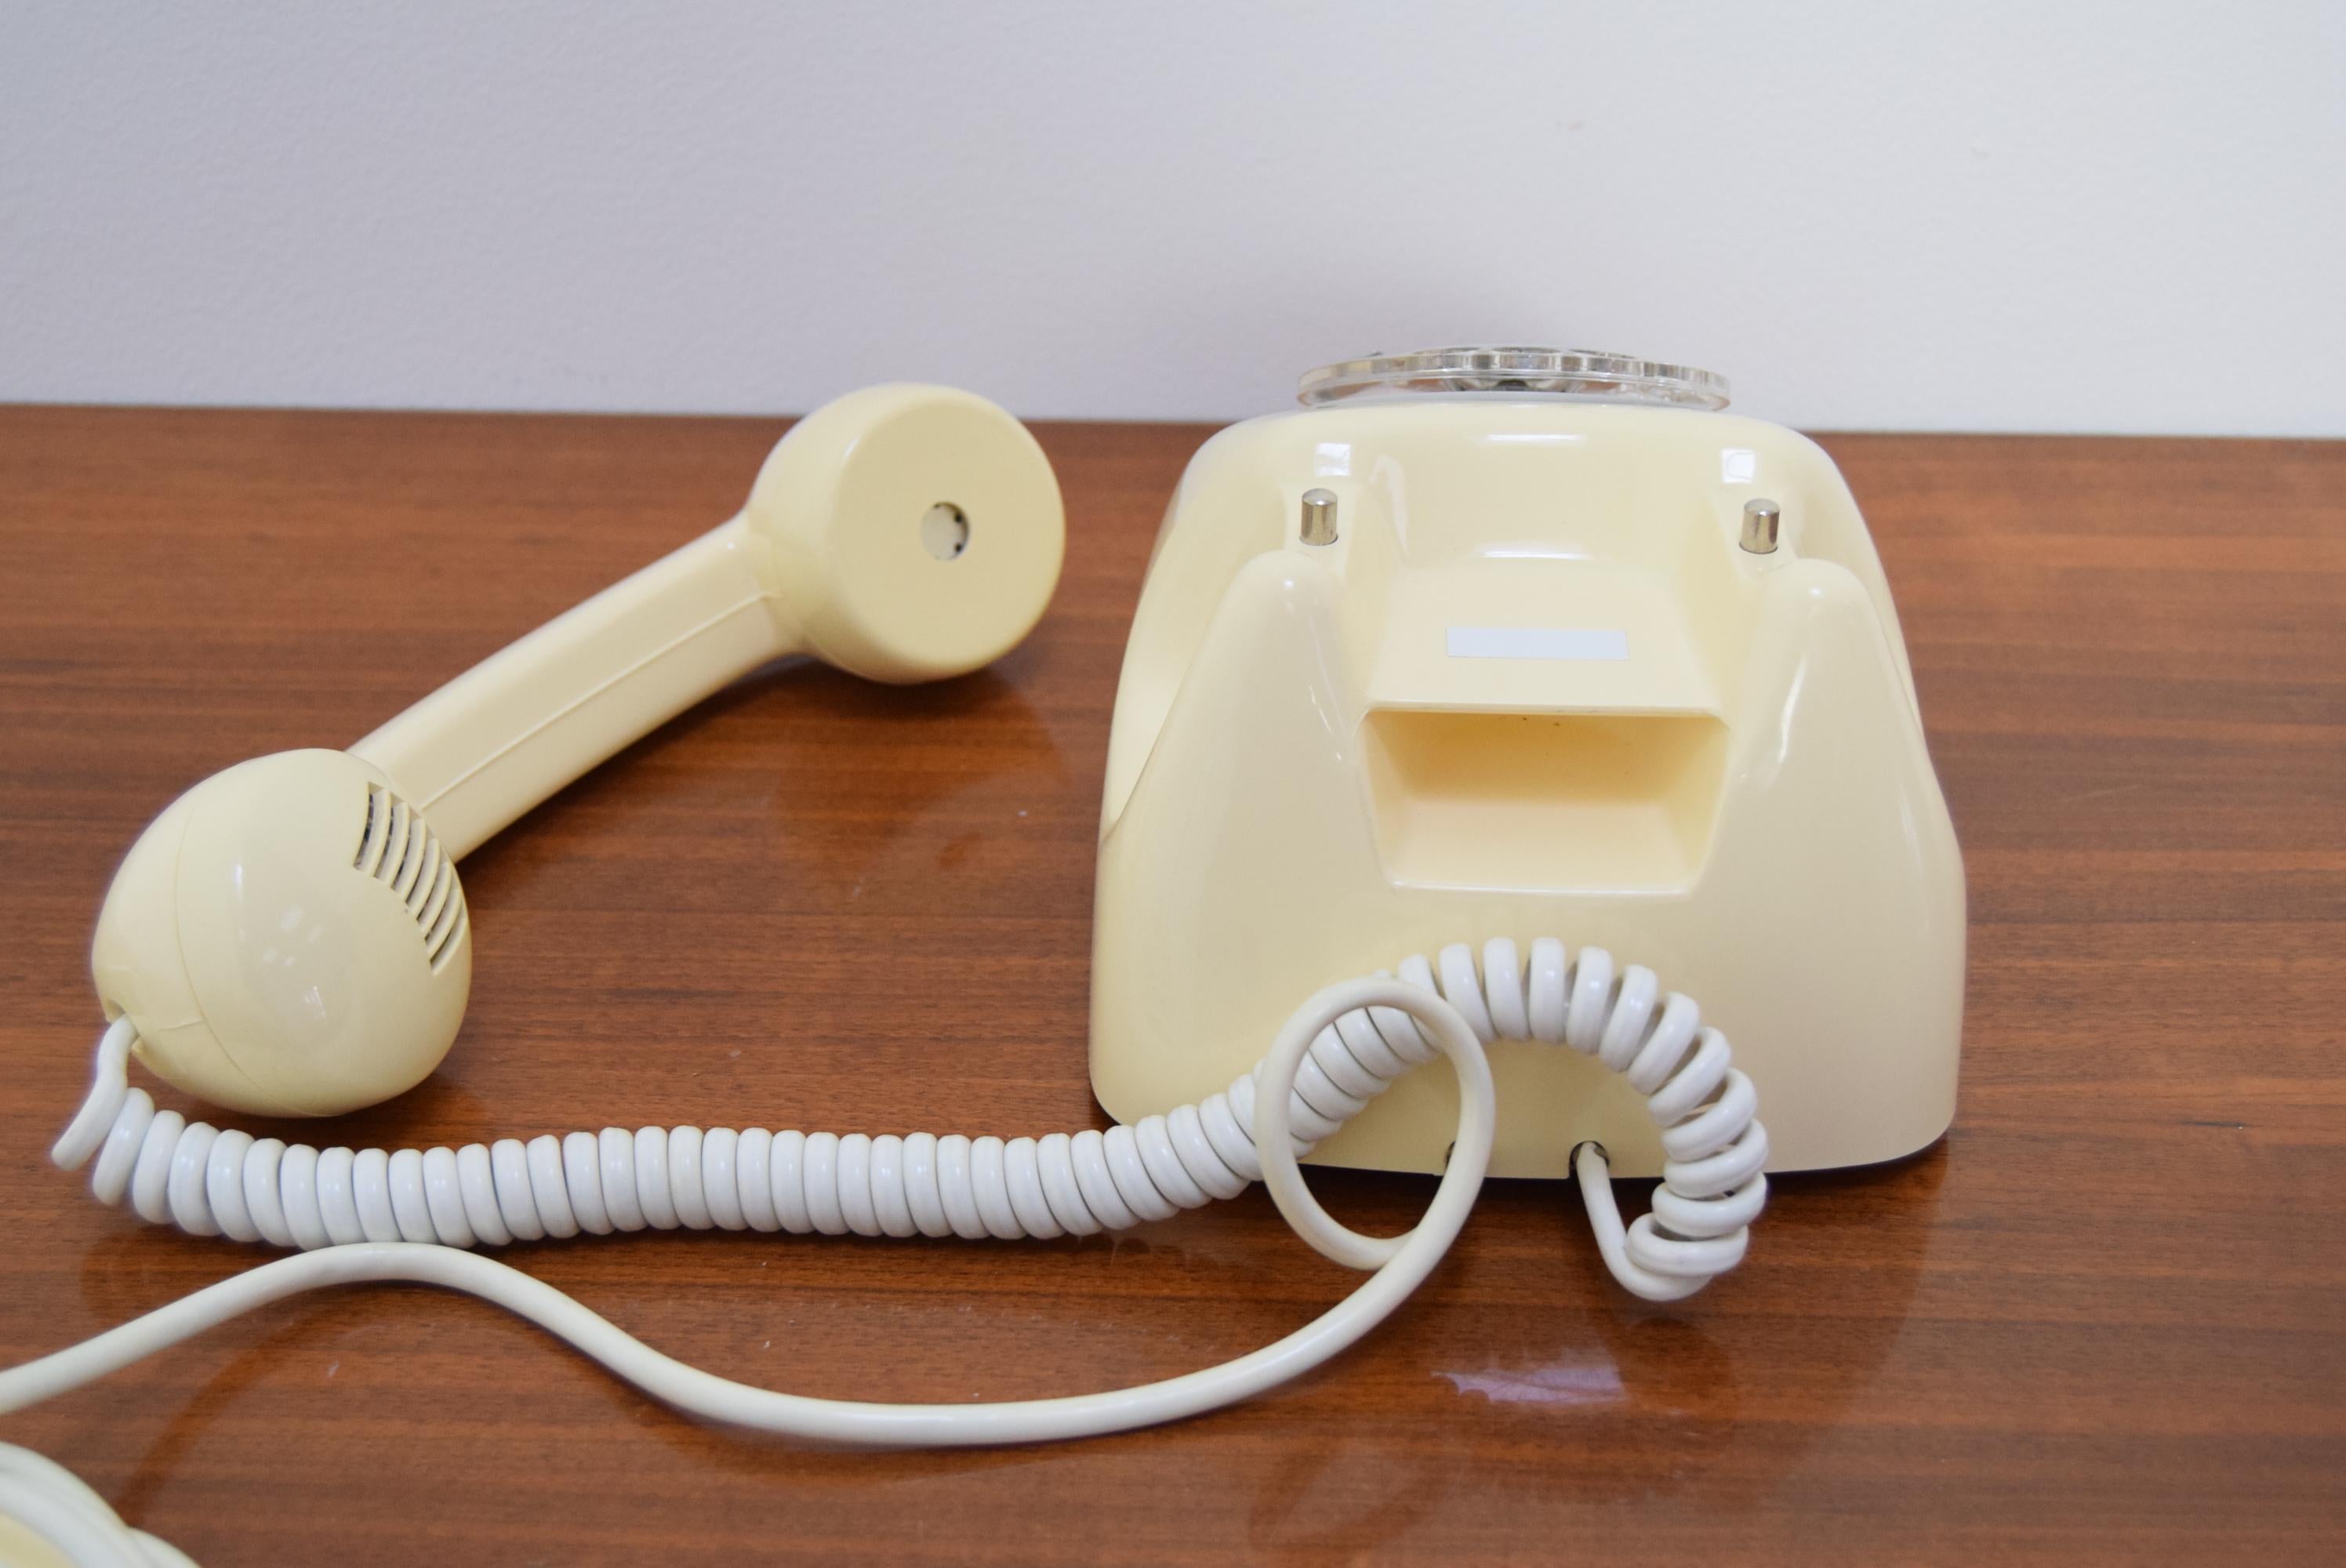 Mid-Century Modern Mid-Century Design Telephone by Tesla, 1979